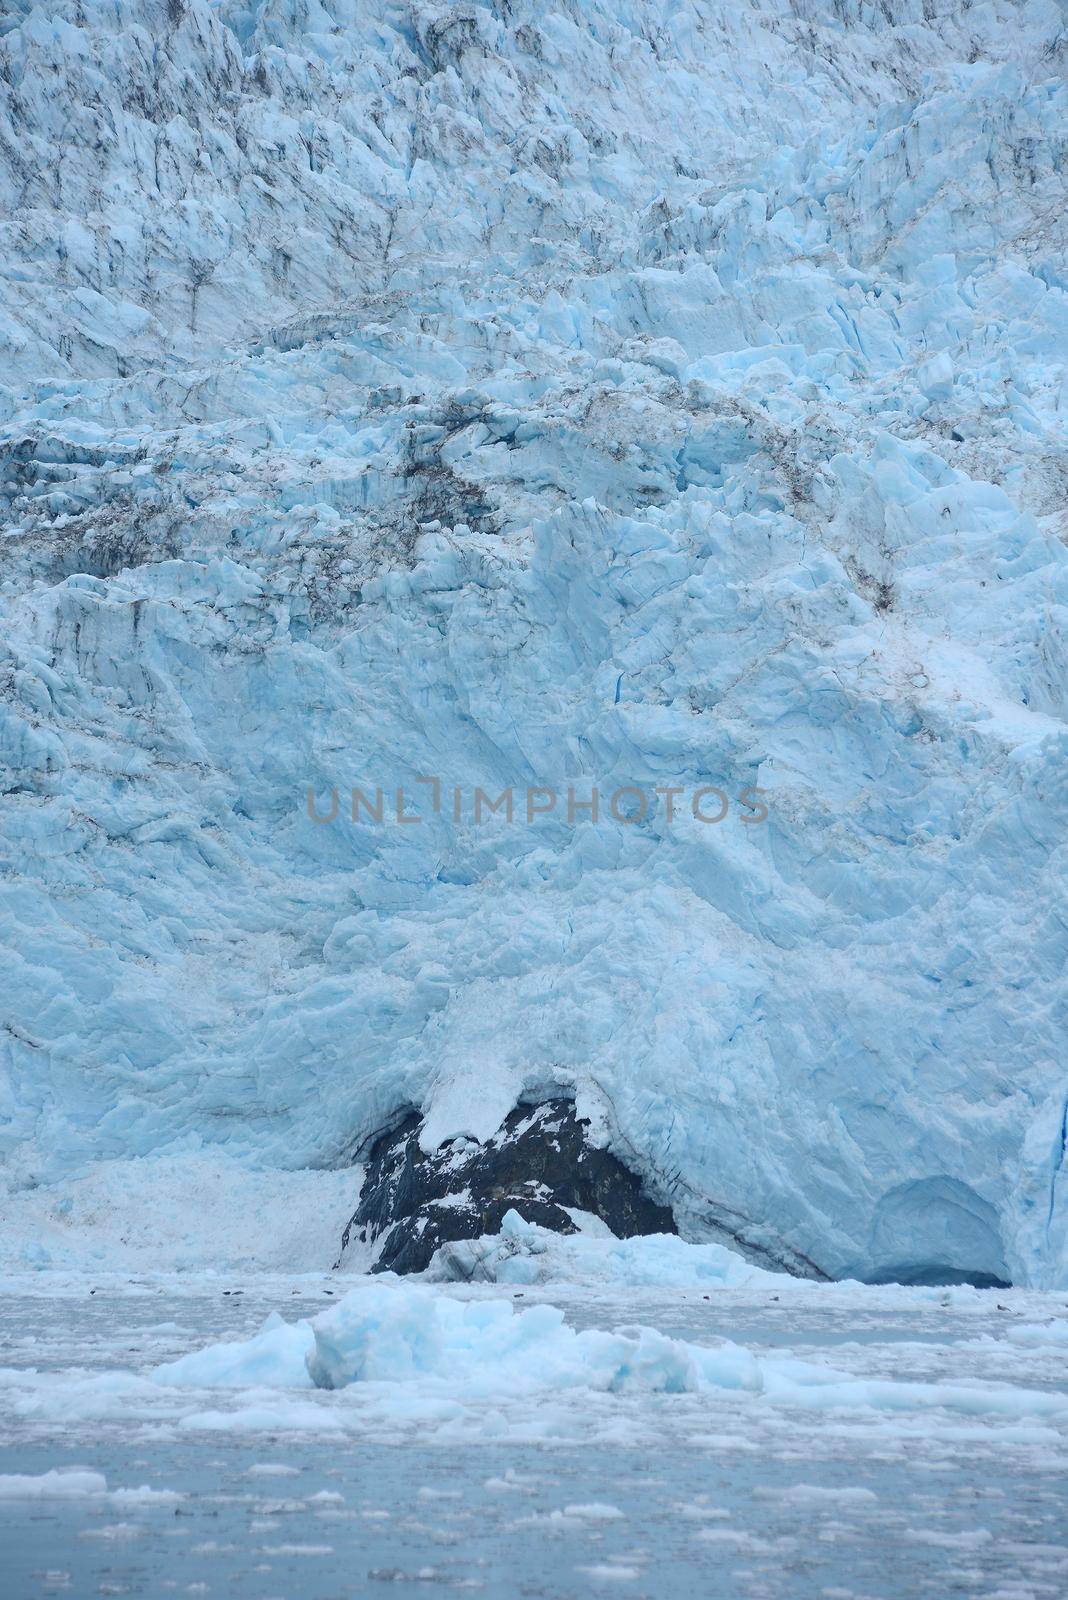 tidewater glacier by porbital